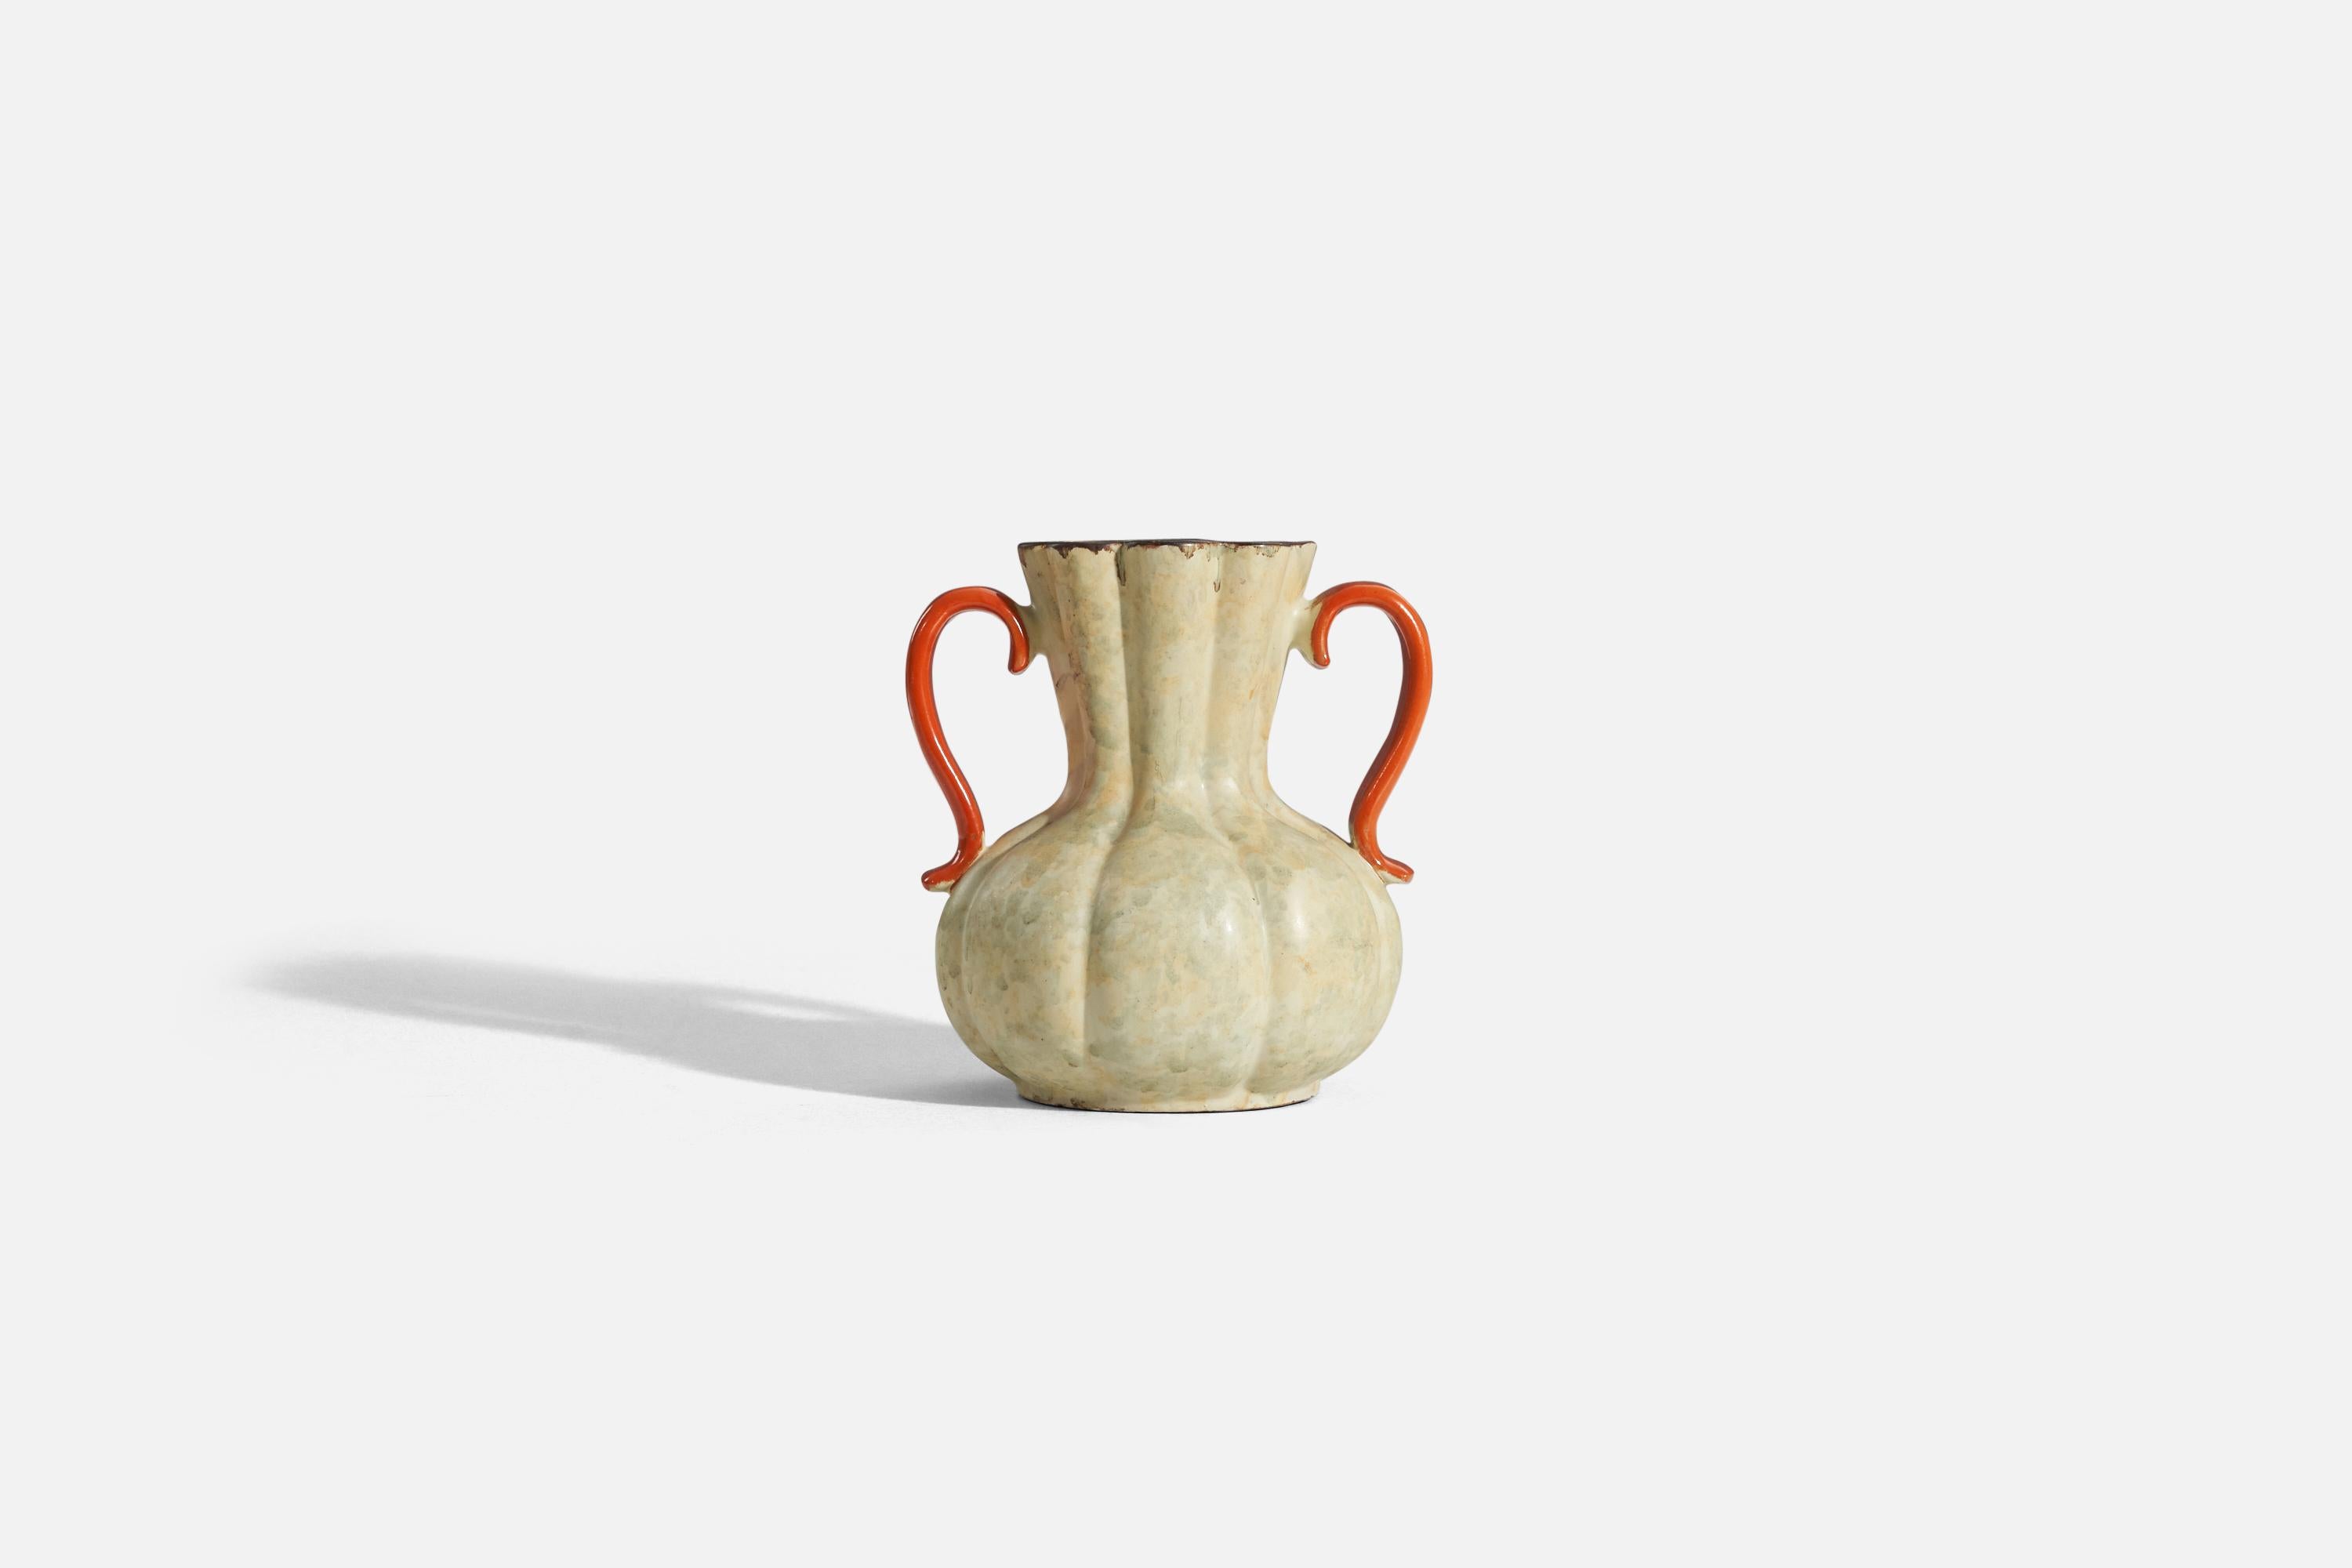 A beige and orange, glazed earthenware vase designed and produced by Upsala-Ekeby, Sweden, c. 1940s.

